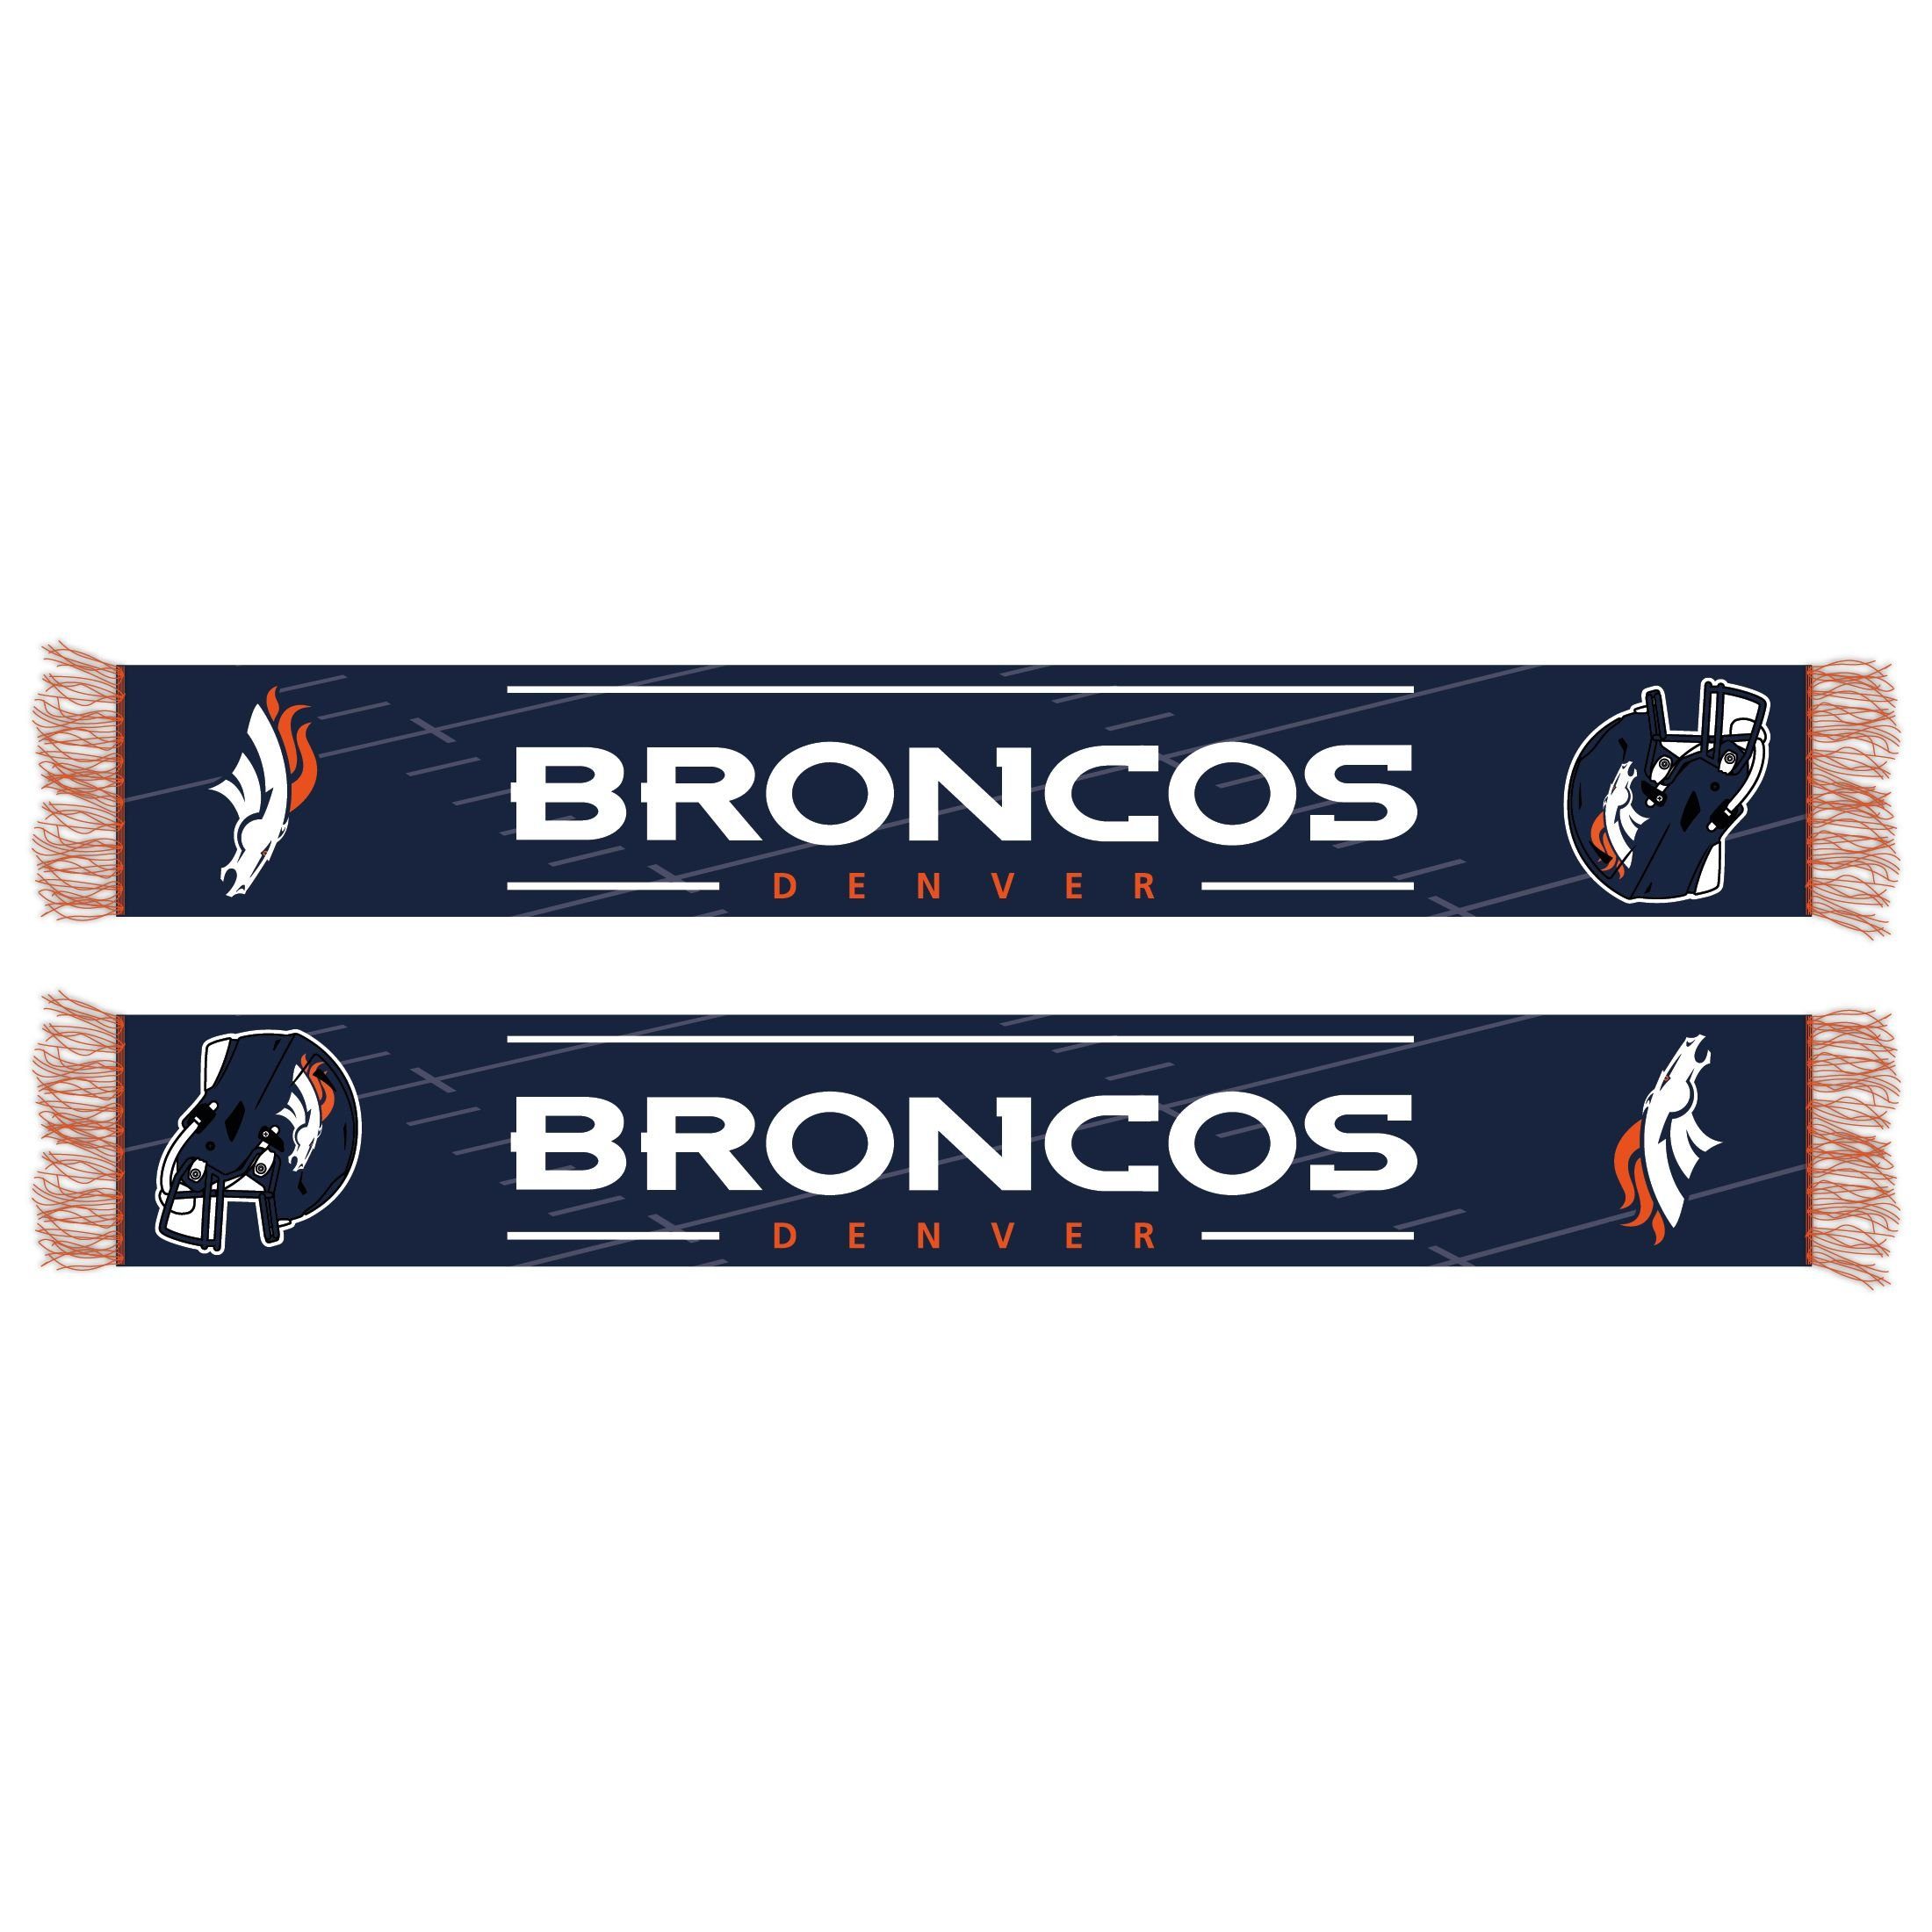 Great Broncos Denver Multifunktionstuch Teams Branding NFL Branding Great